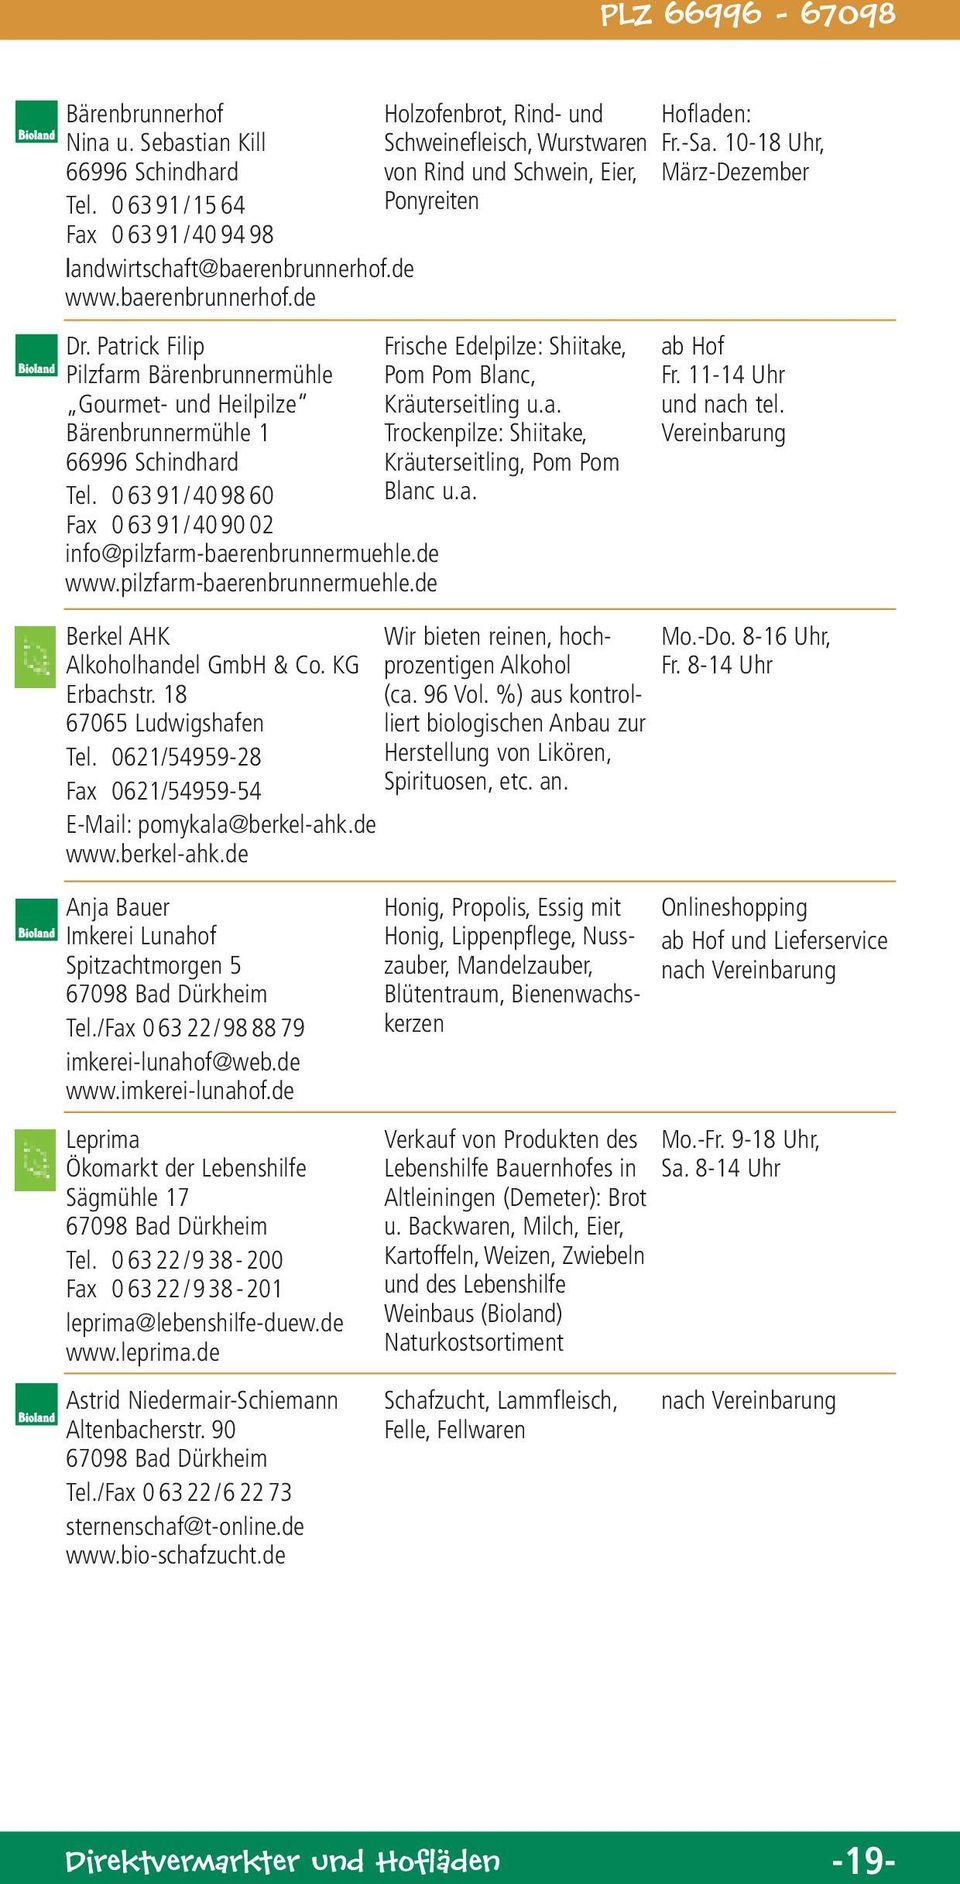 pilzfarm-baerenbrunnermuehle.de Berkel AHK Alkoholhandel GmbH & Co. KG Erbachstr. 18 67065 Ludwigshafen Tel. 0621/54959-28 Fax 0621/54959-54 E-Mail: pomykala@berkel-ahk.